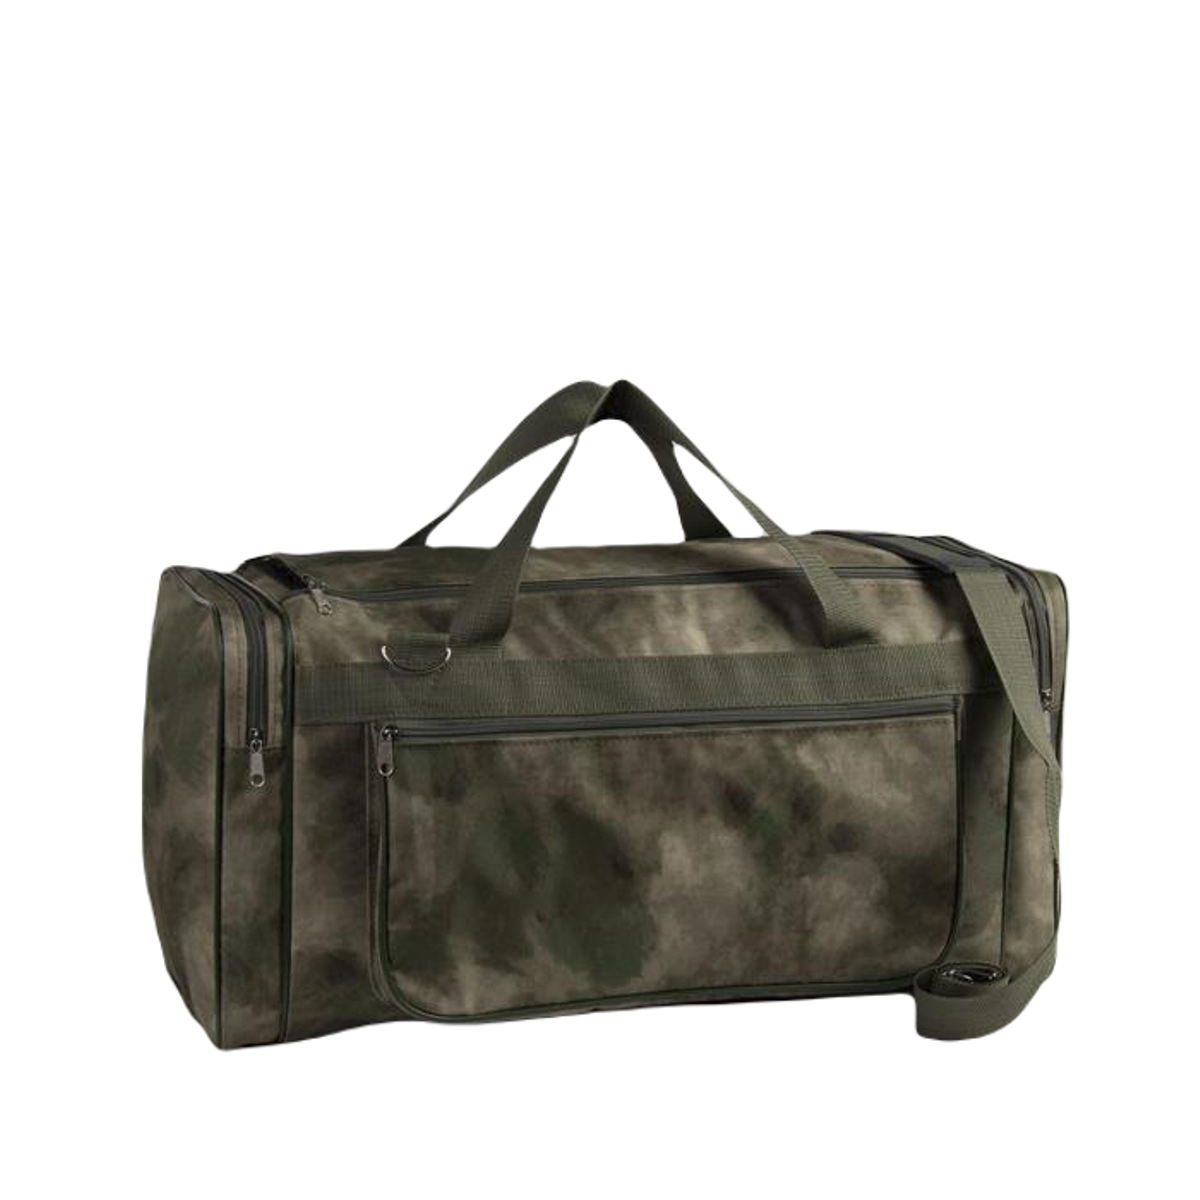 Дорожная сумка мужская Р00002456, камуфляж, зелёный ЗФТС. Цвет: зеленый